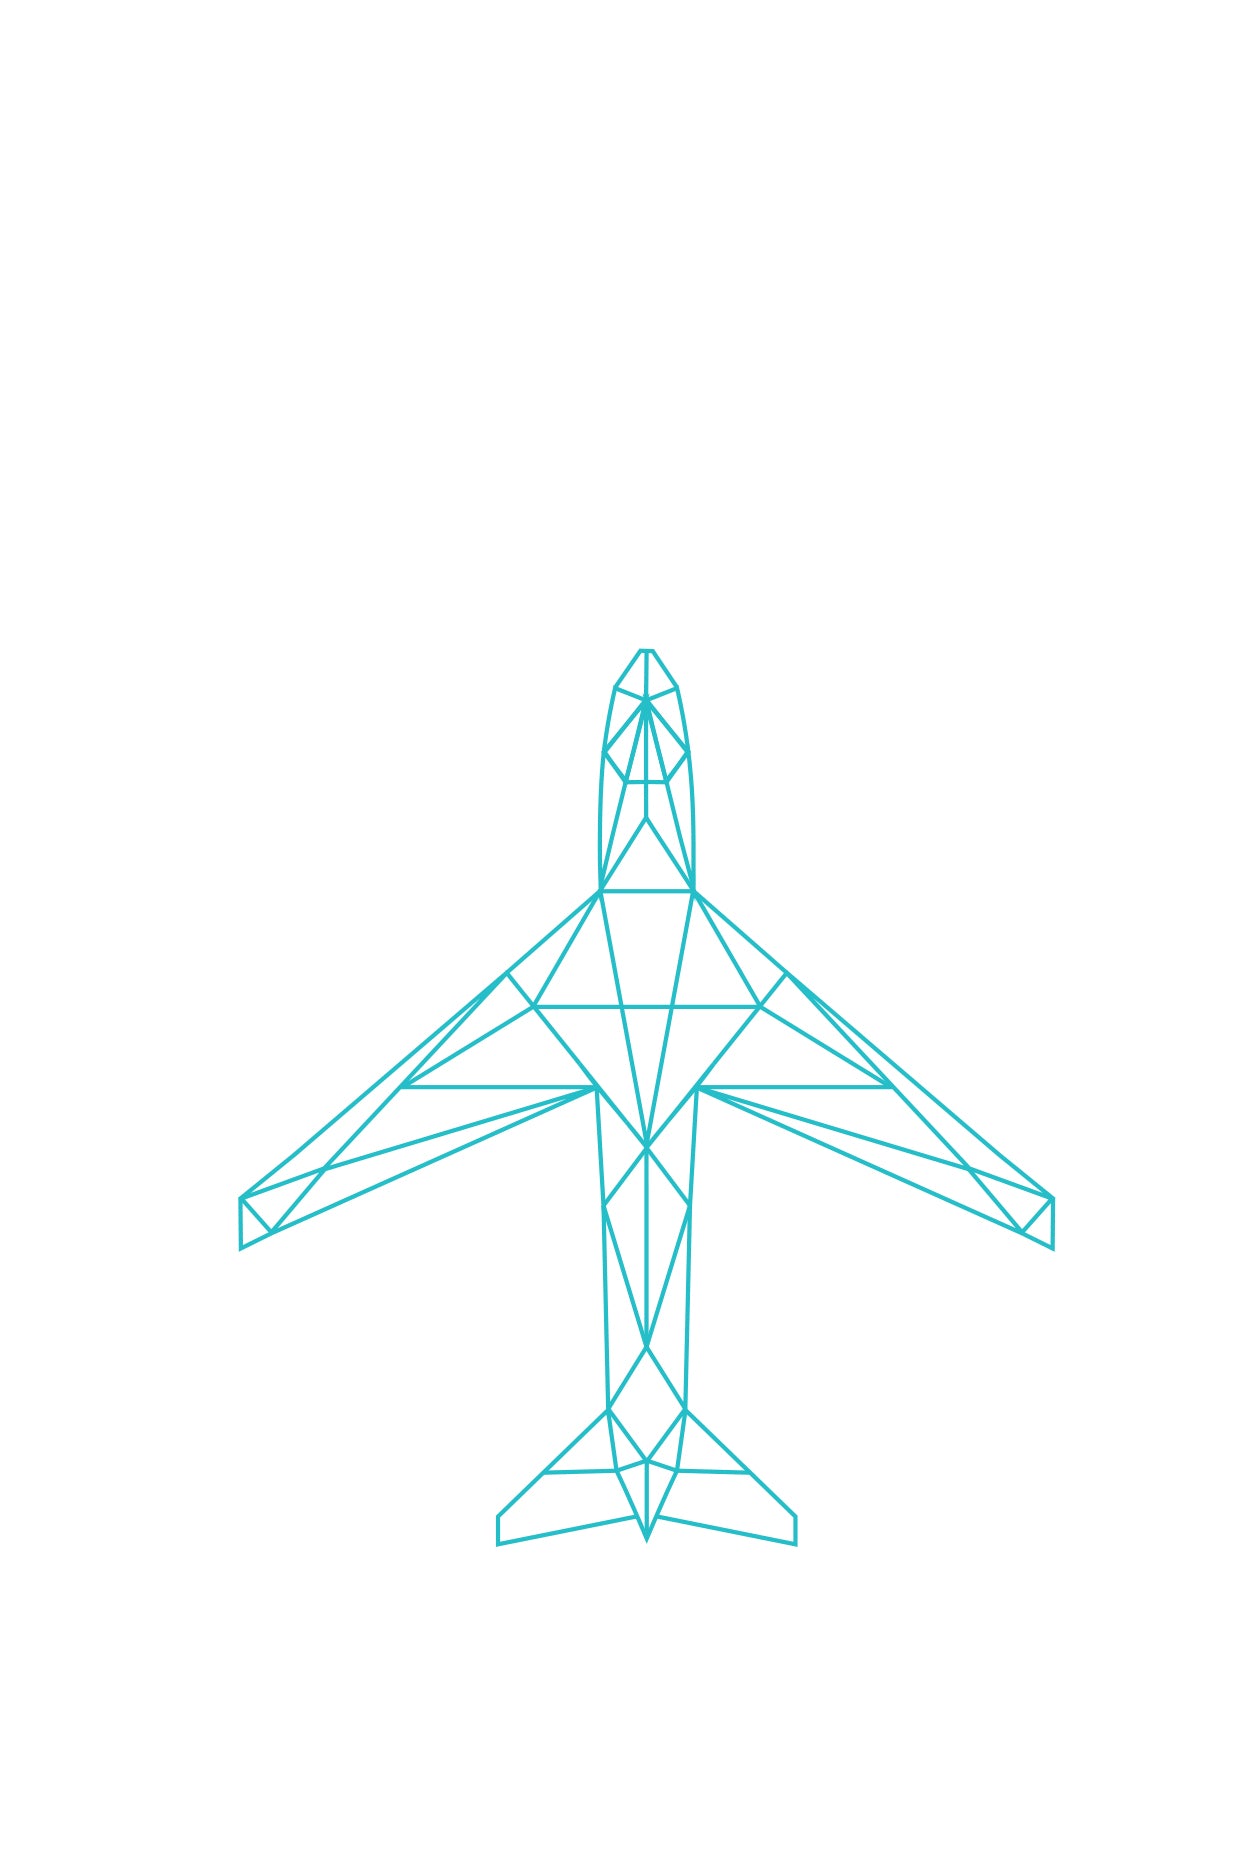 A geometric illustration of an aircraft.